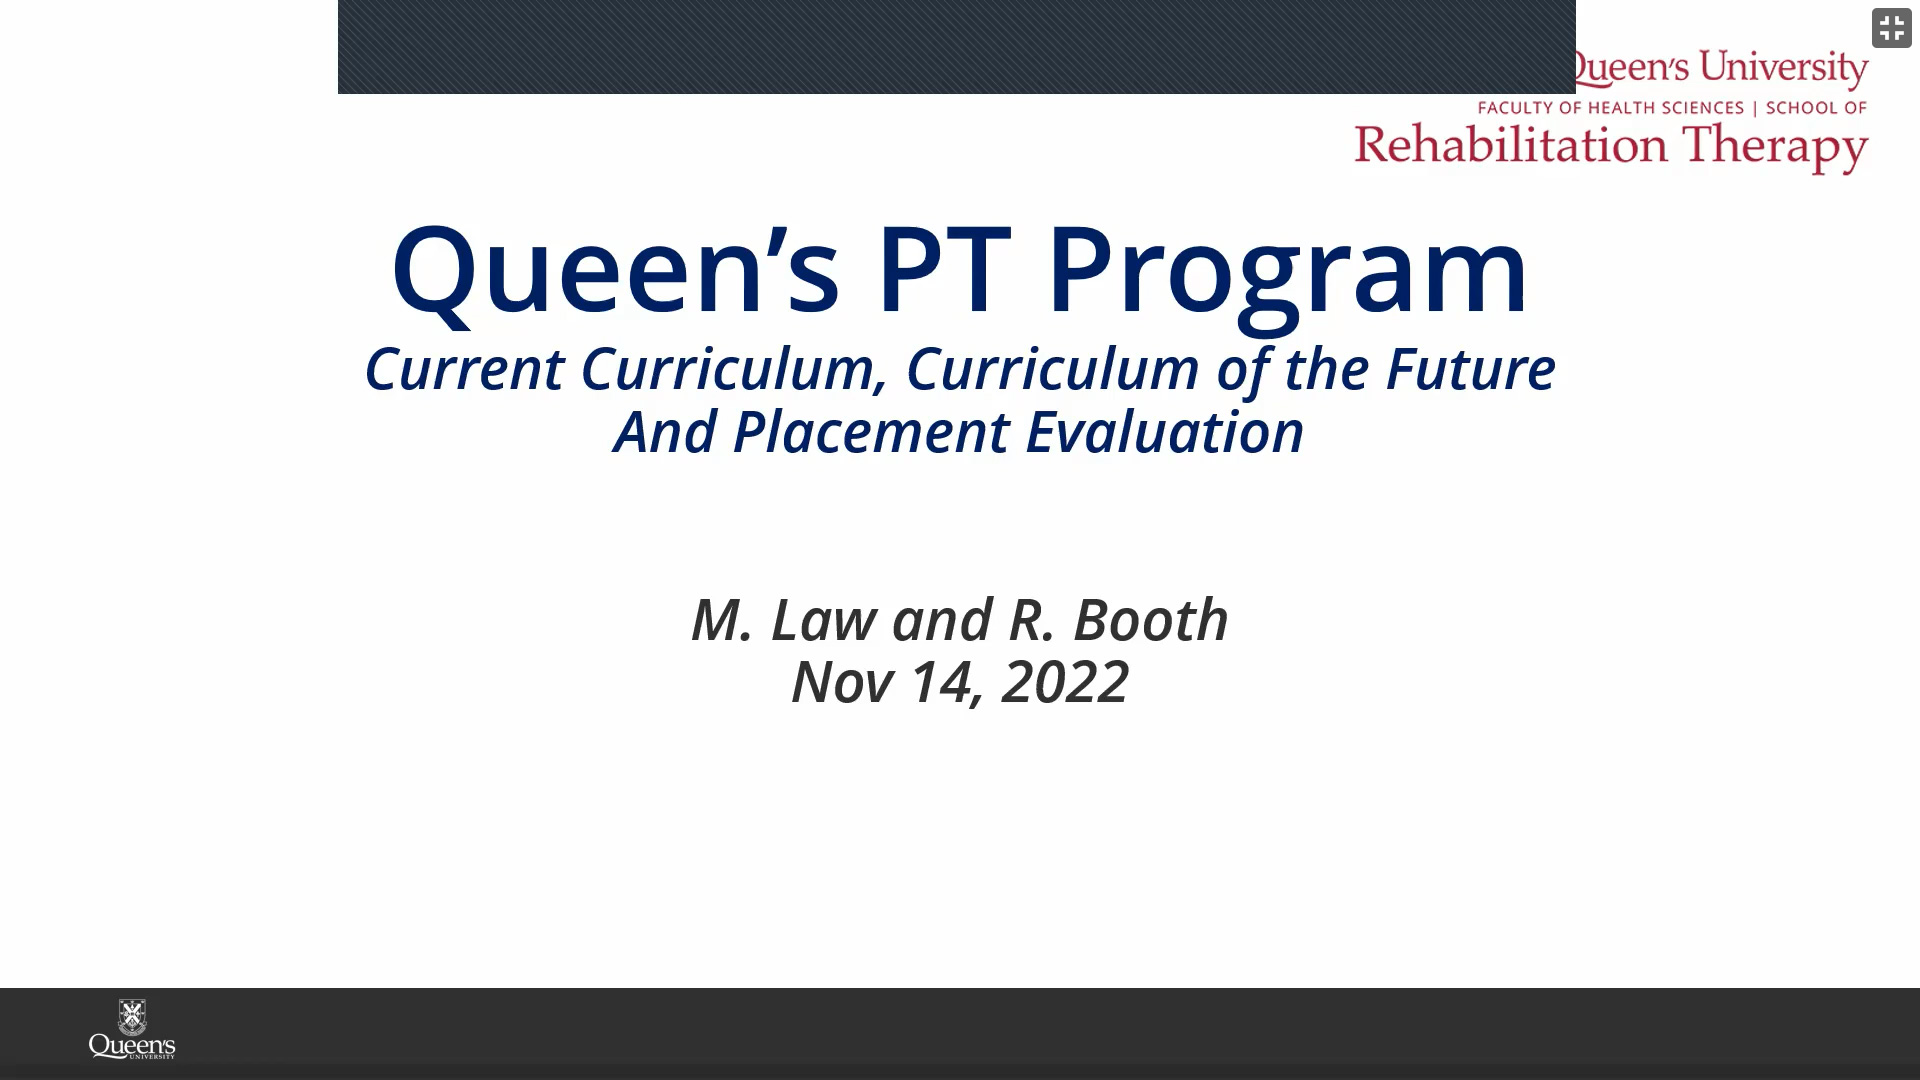 Queen's PT Program: Current Curriculum, Curriculum of the Future and Placement Evaluation